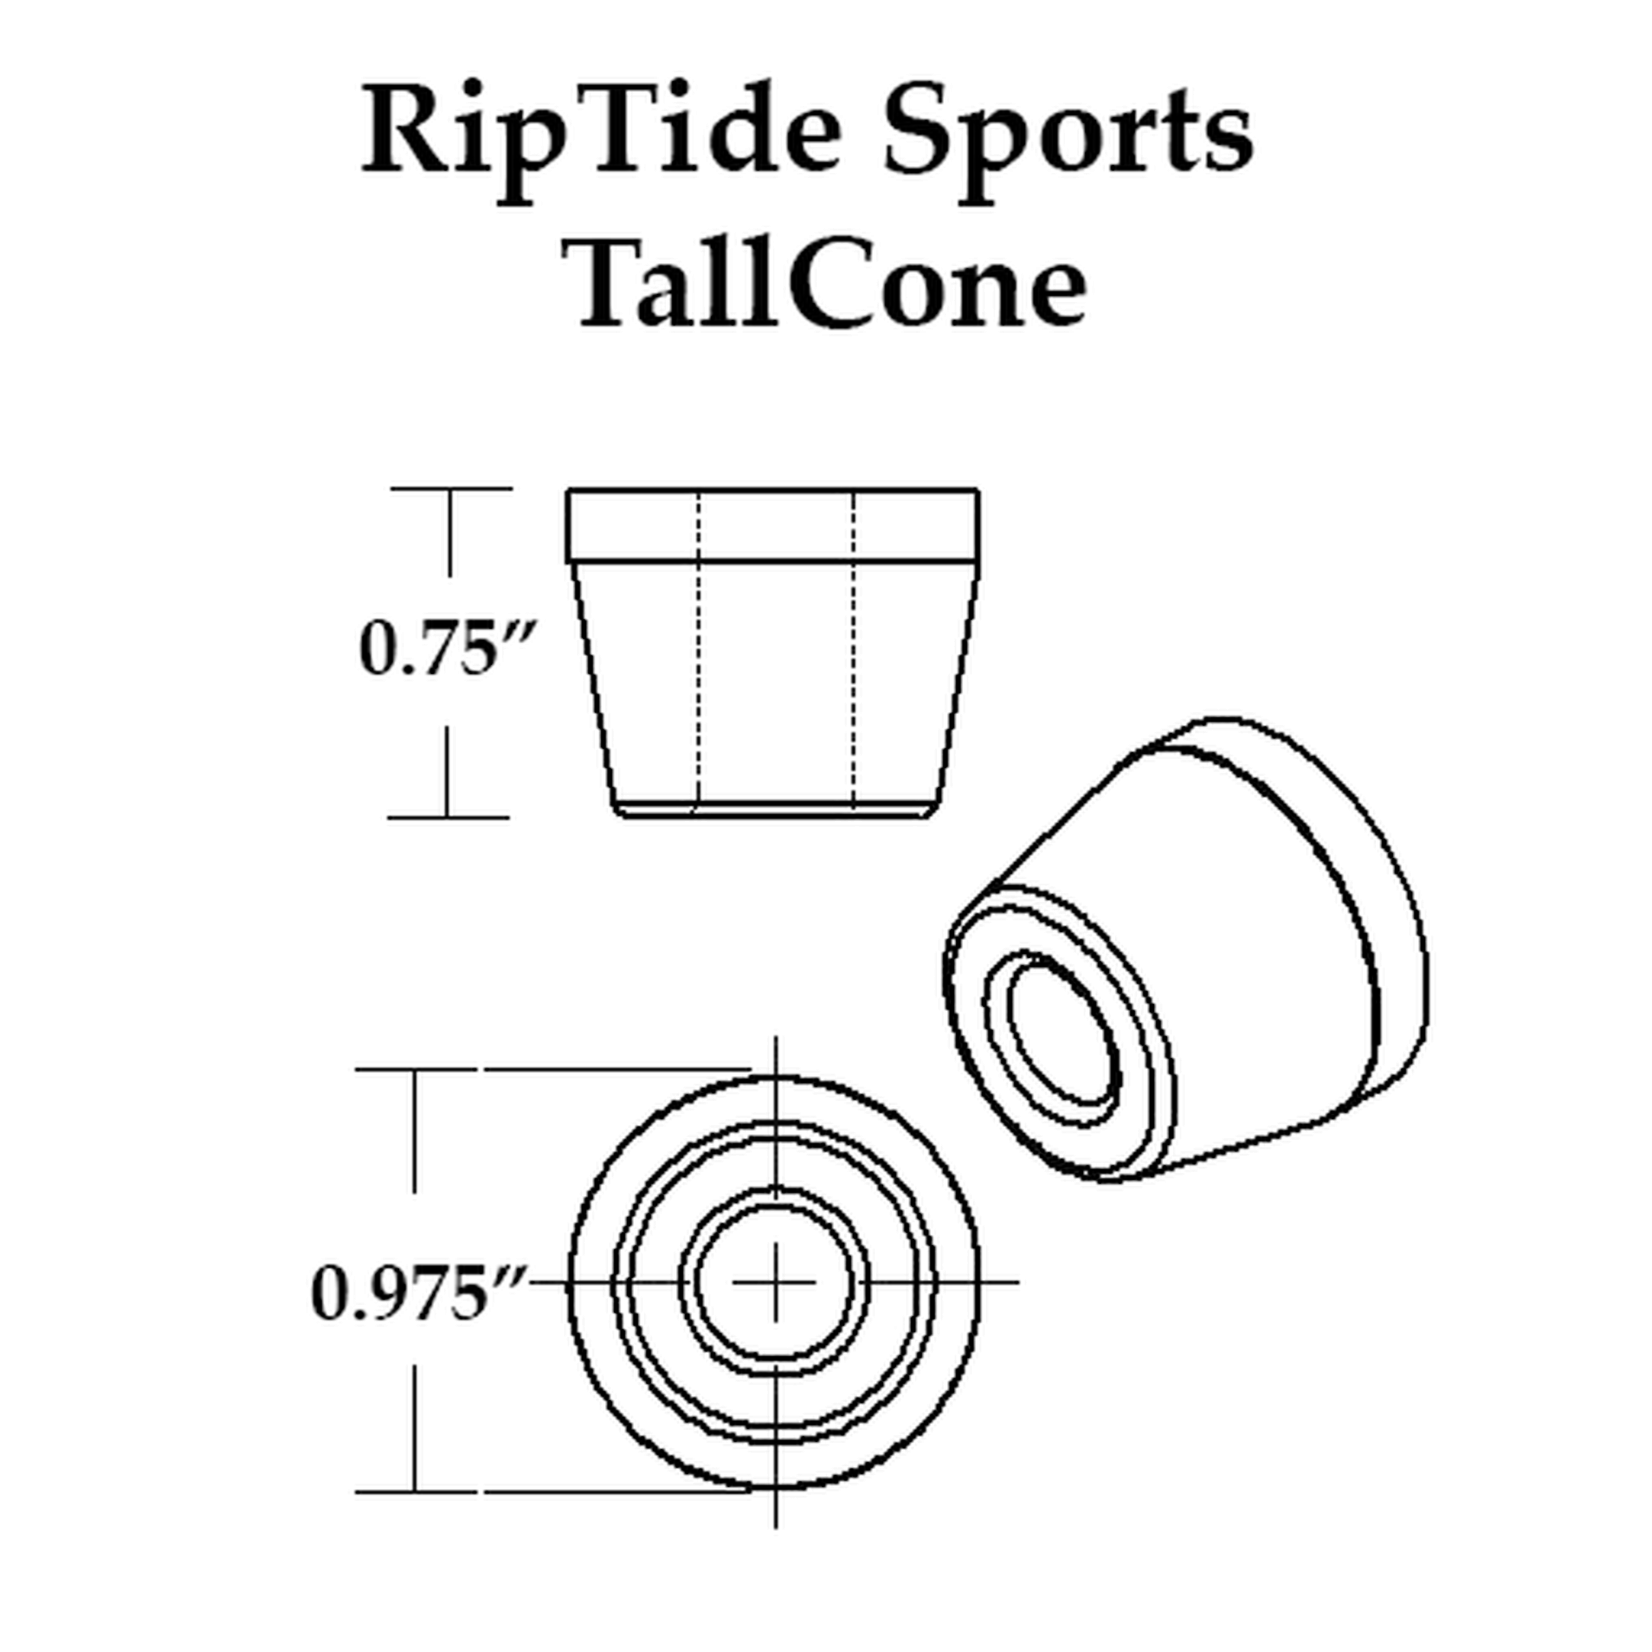 Riptide Sports WFB TallCone